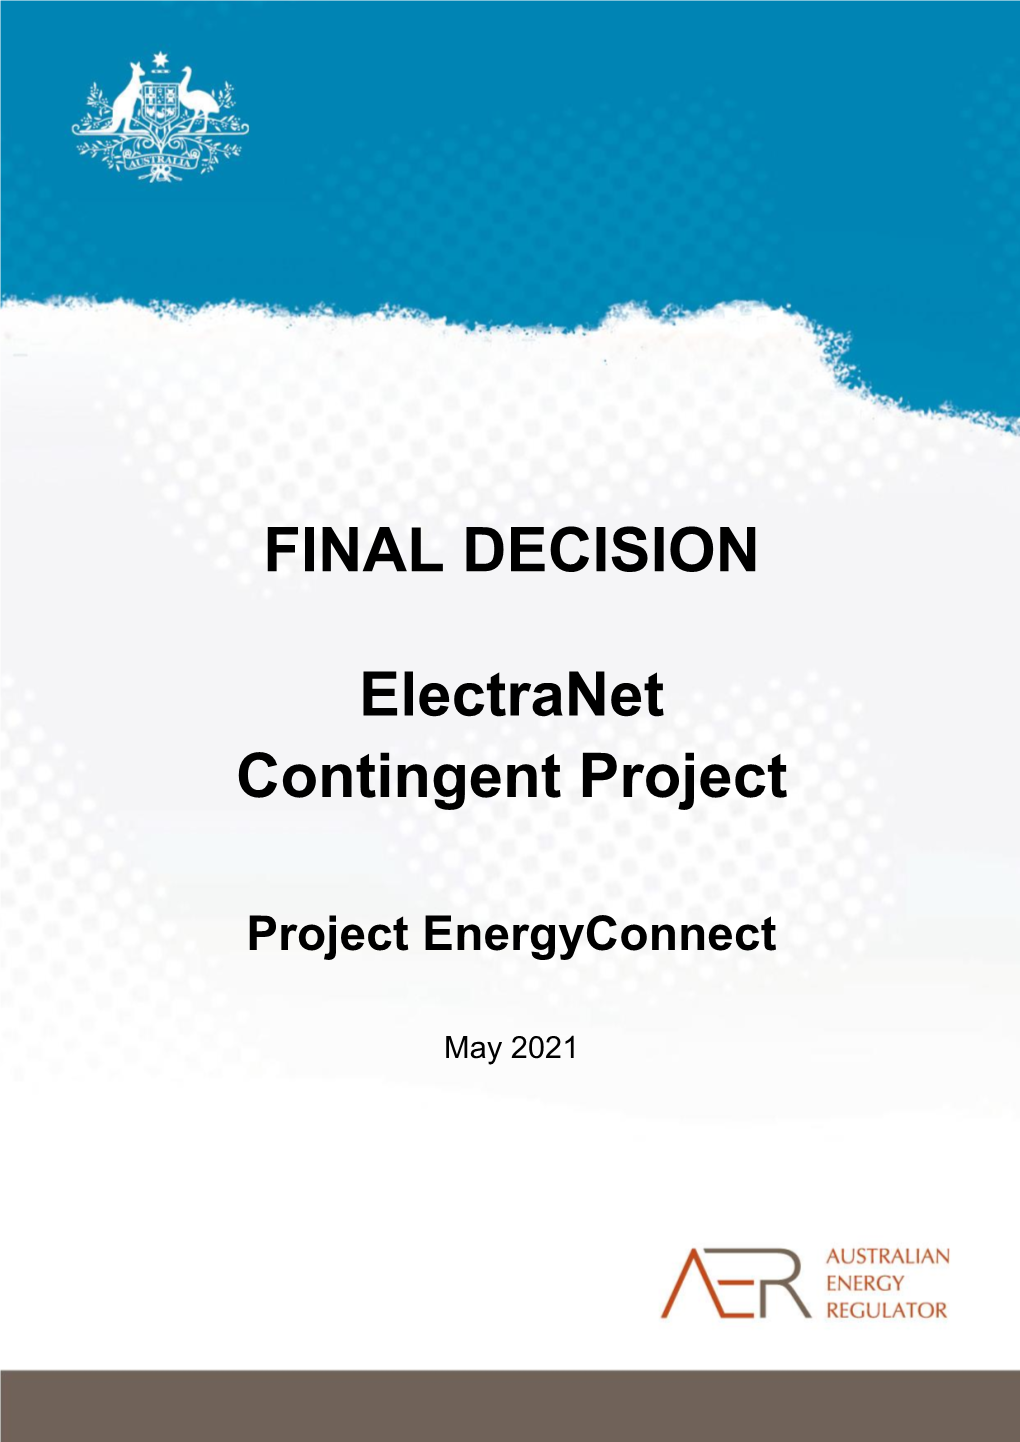 FINAL DECISION Electranet Contingent Project